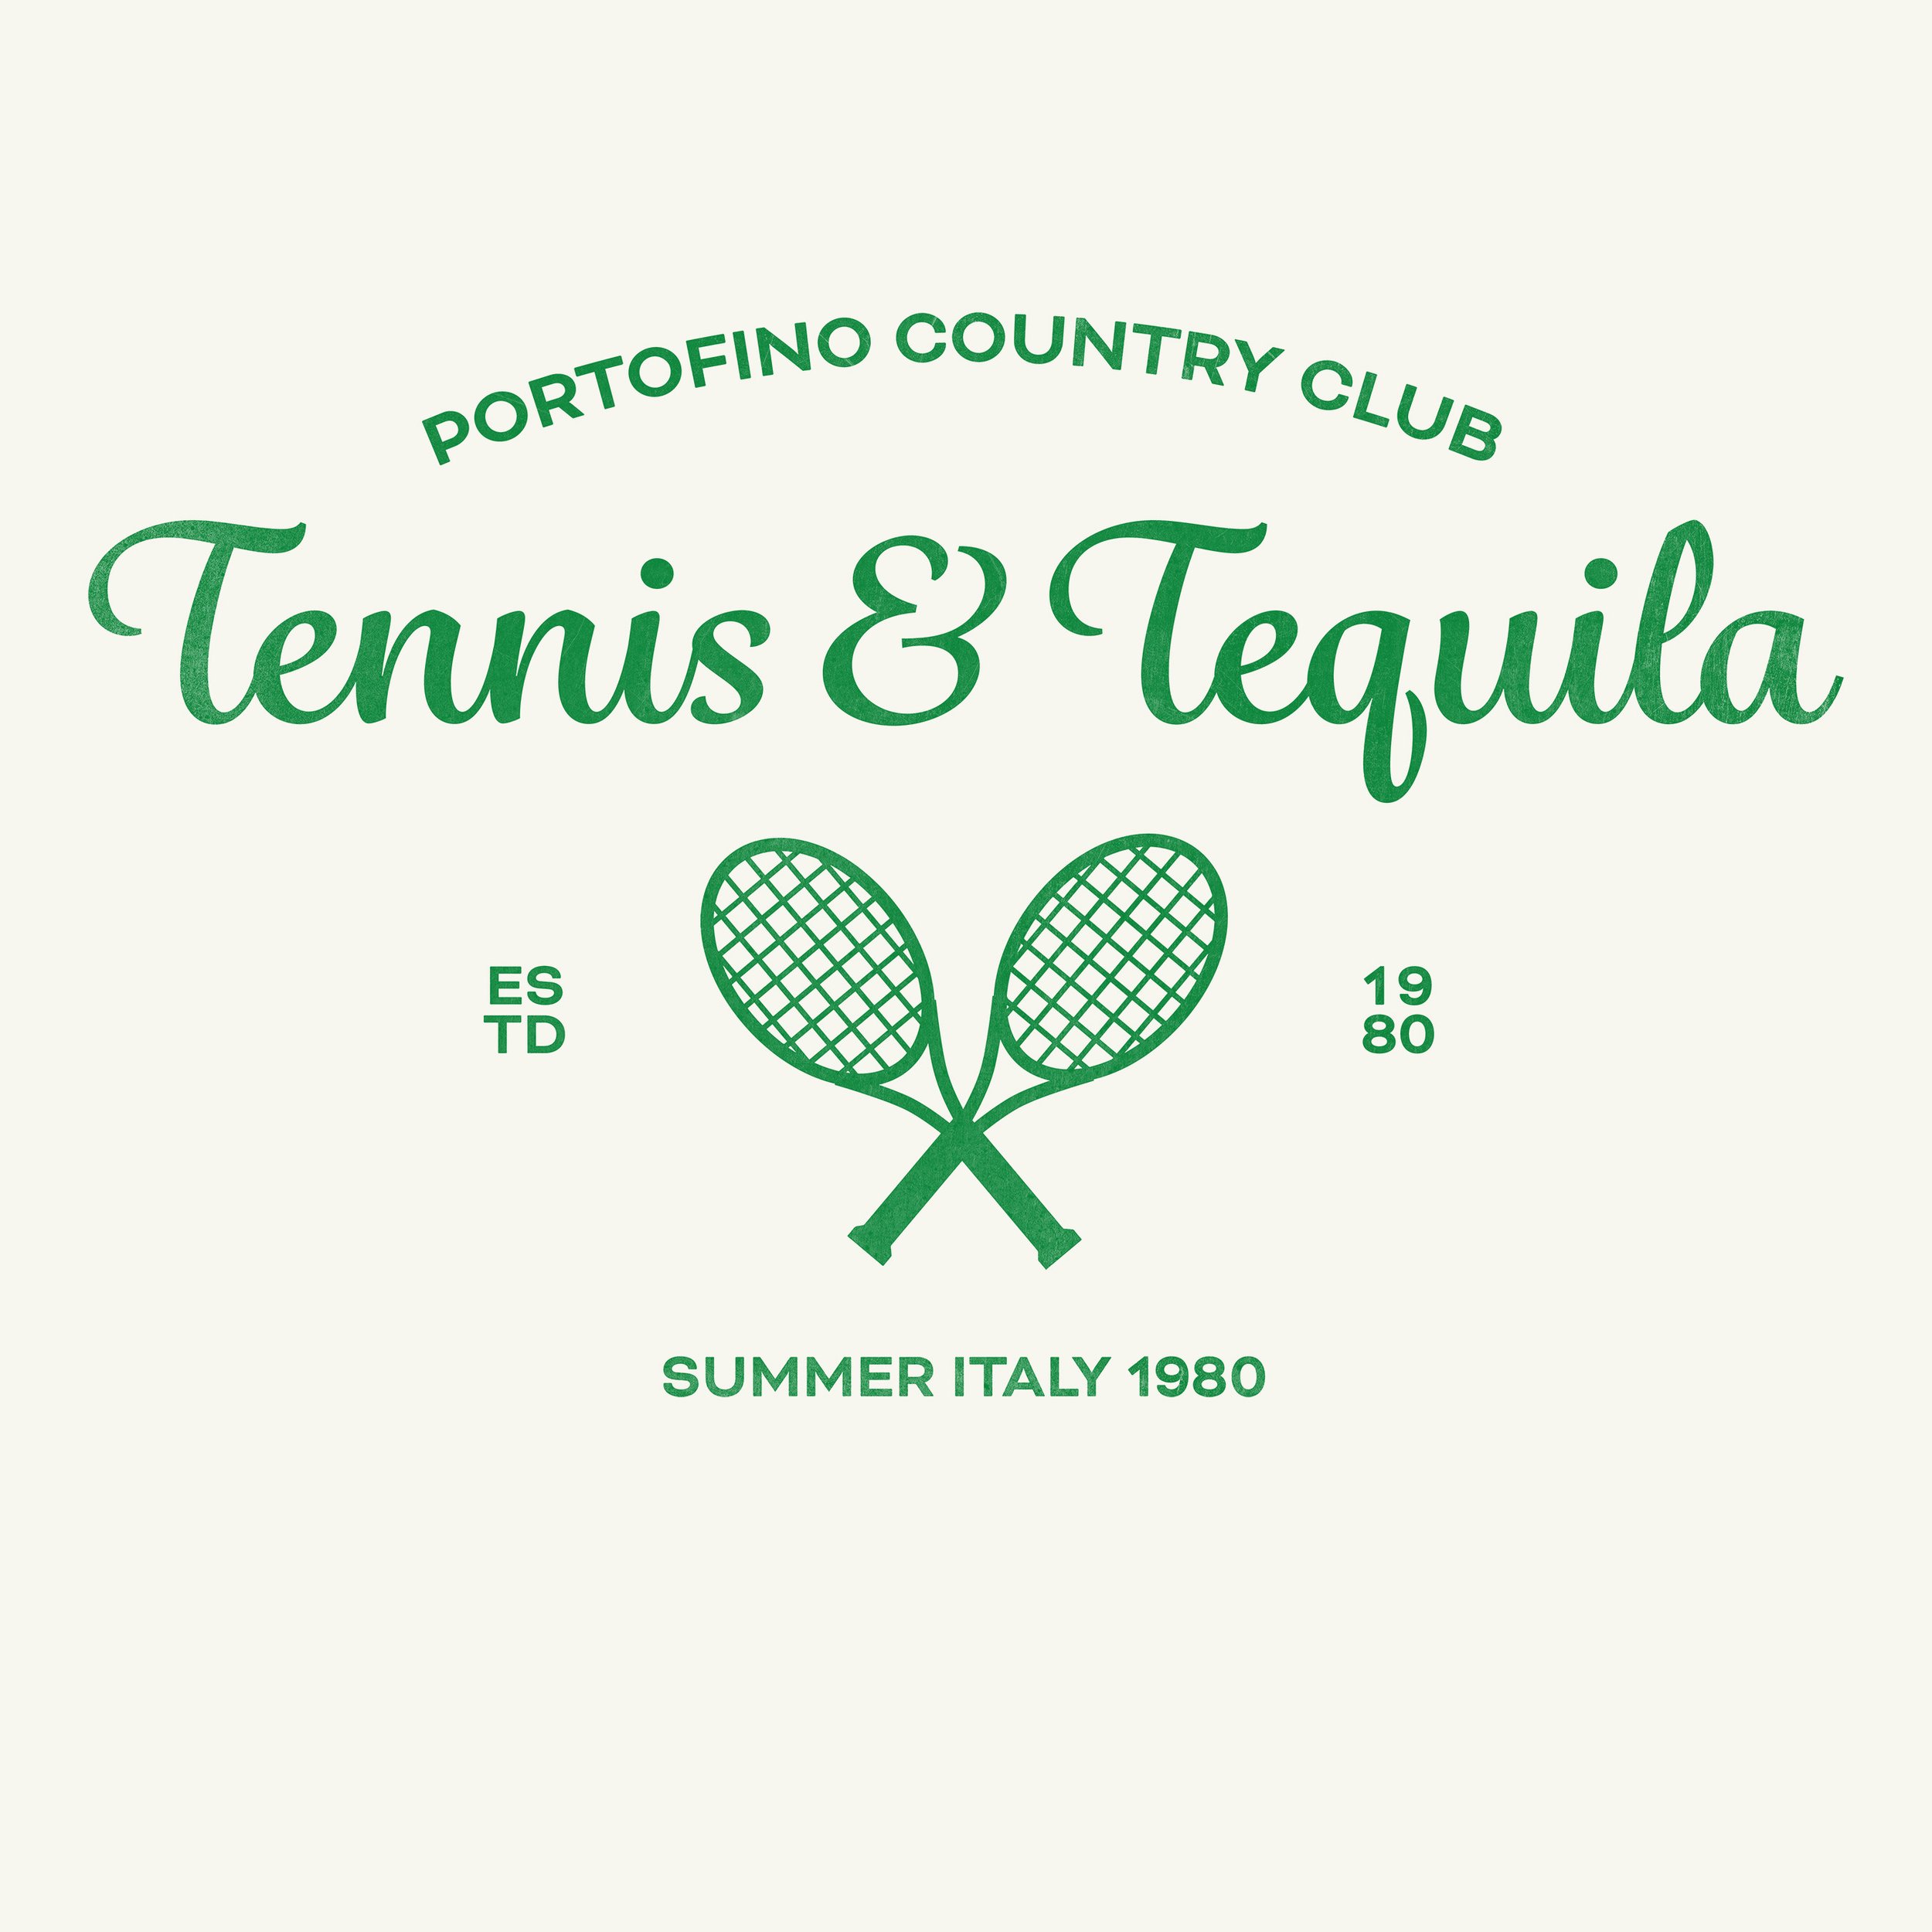 Tennis_Tequila_Portofino_Italy_Shirt1.jpg